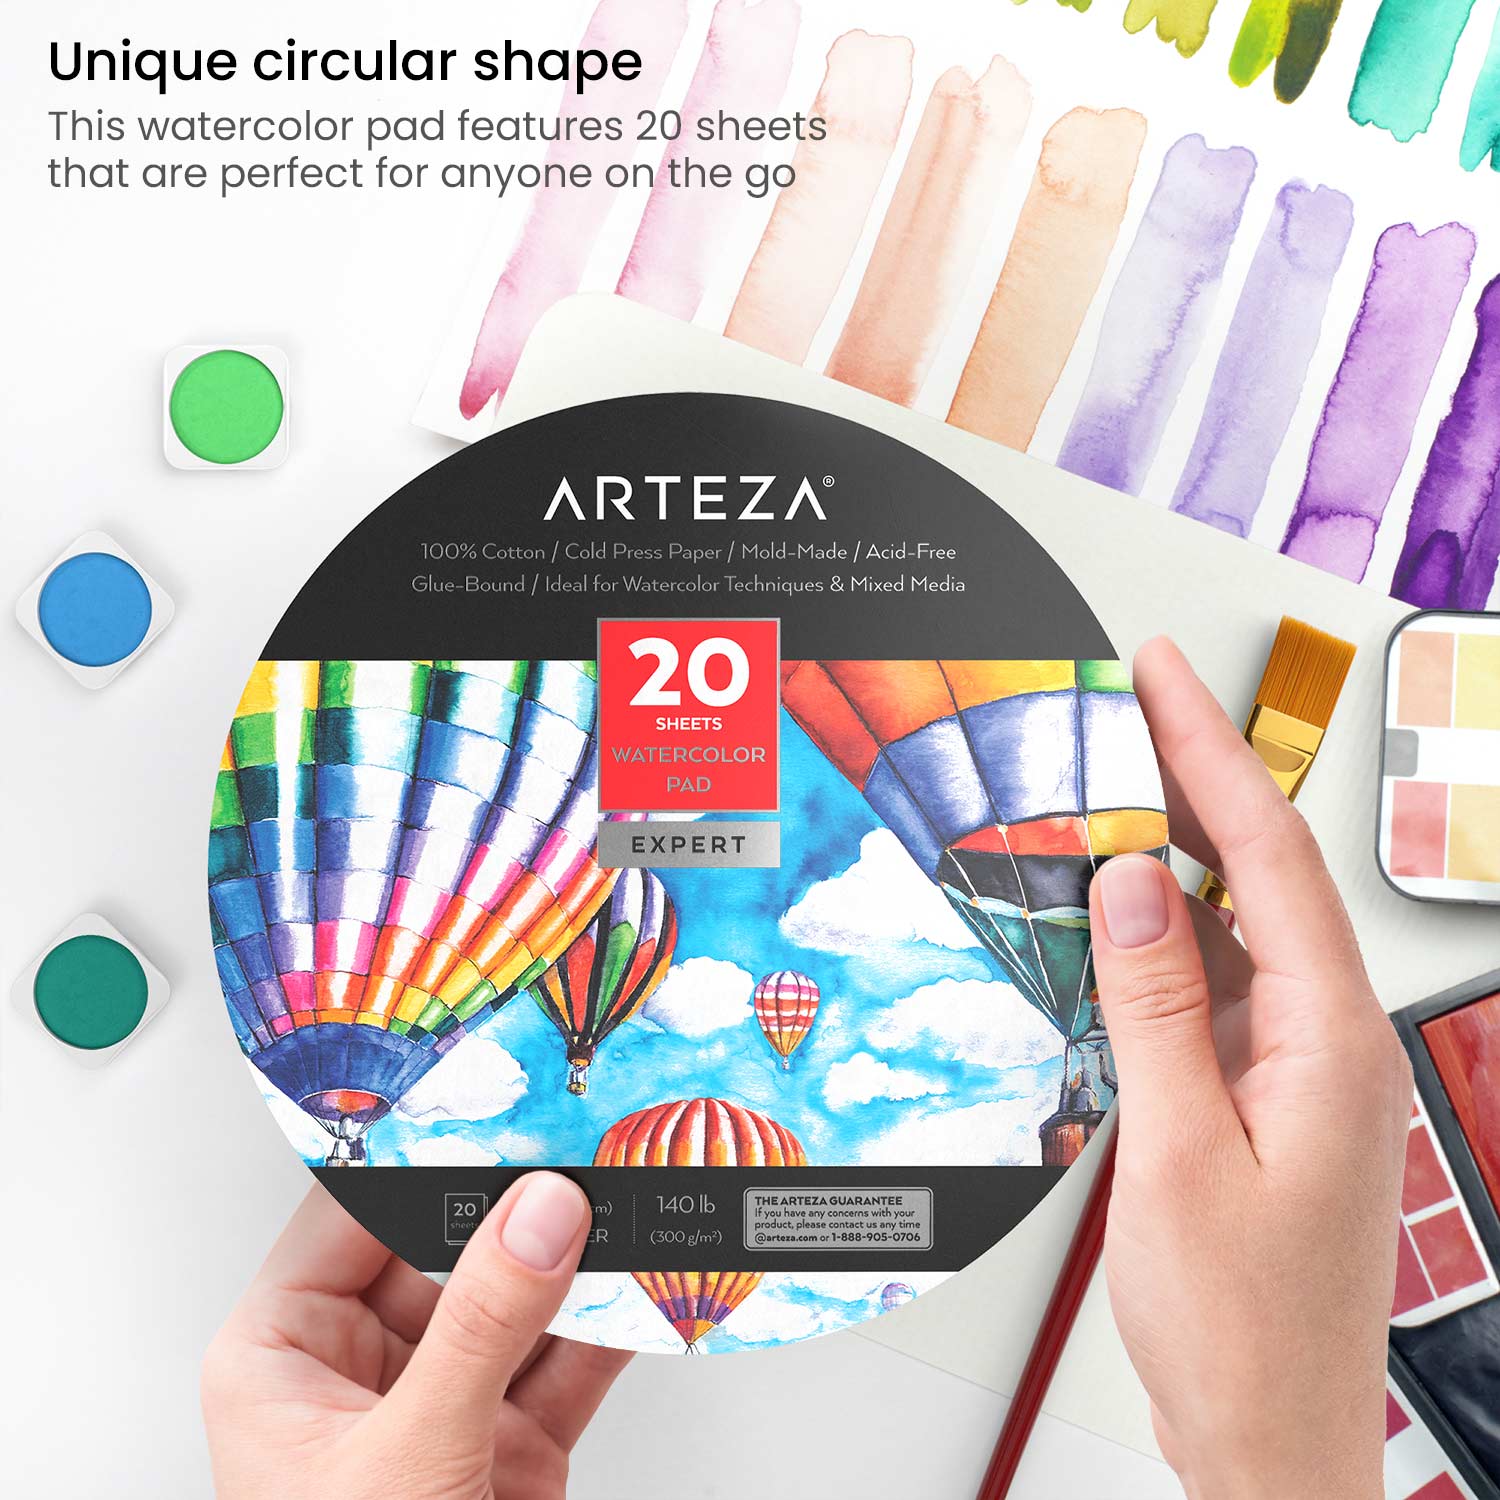 Arteza Expert Watercolor Pad, 100% Cotton, Hot-Pressed, 9 x 12” - 14  sheets